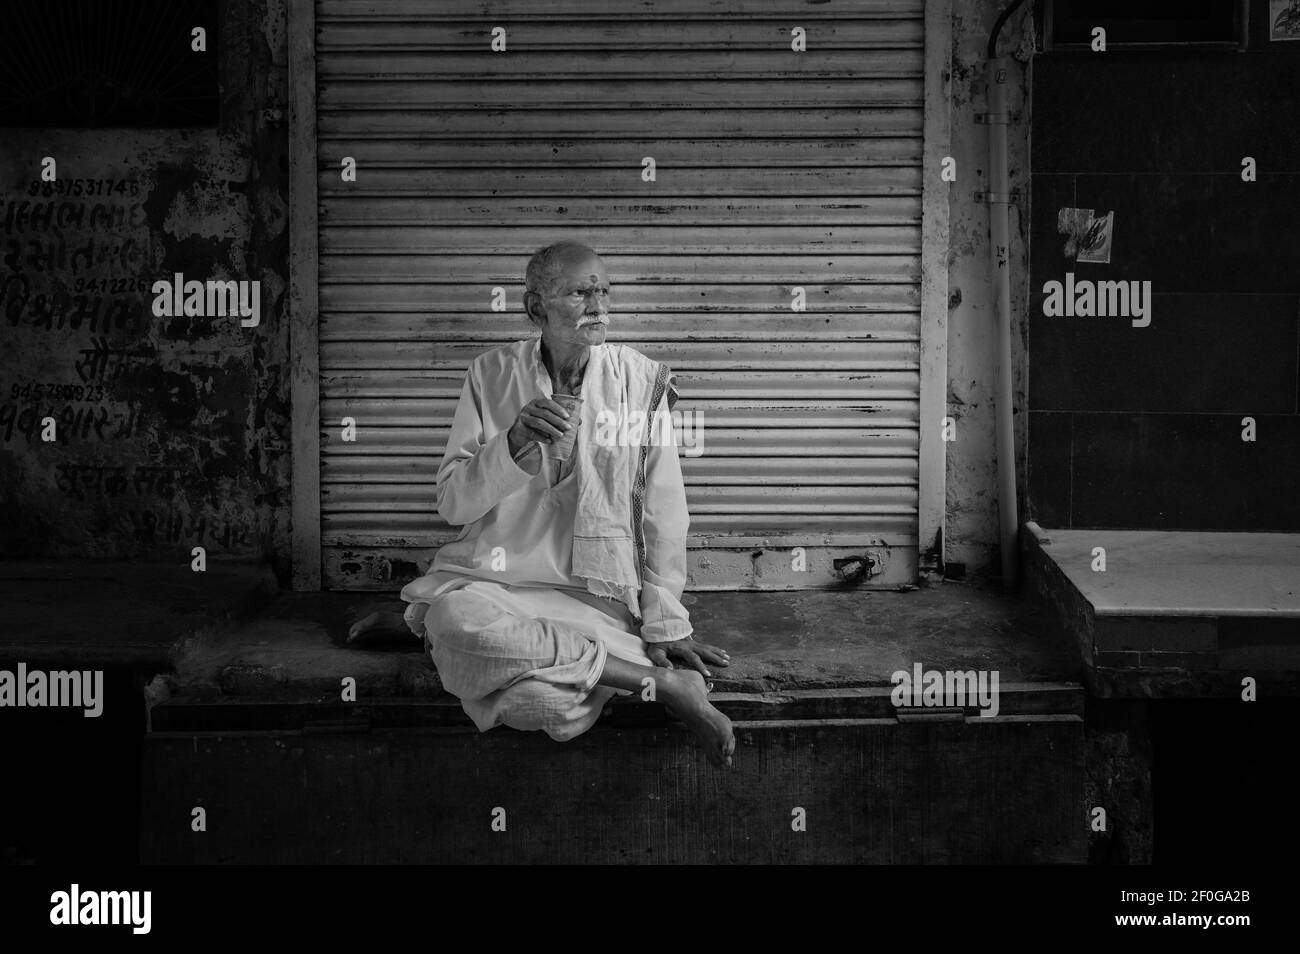 Candid portrait of older man sitting cross-legged looking thoughtful and drinking tea in street scene in Mathura, Uttar Pradesh, India. Stock Photo